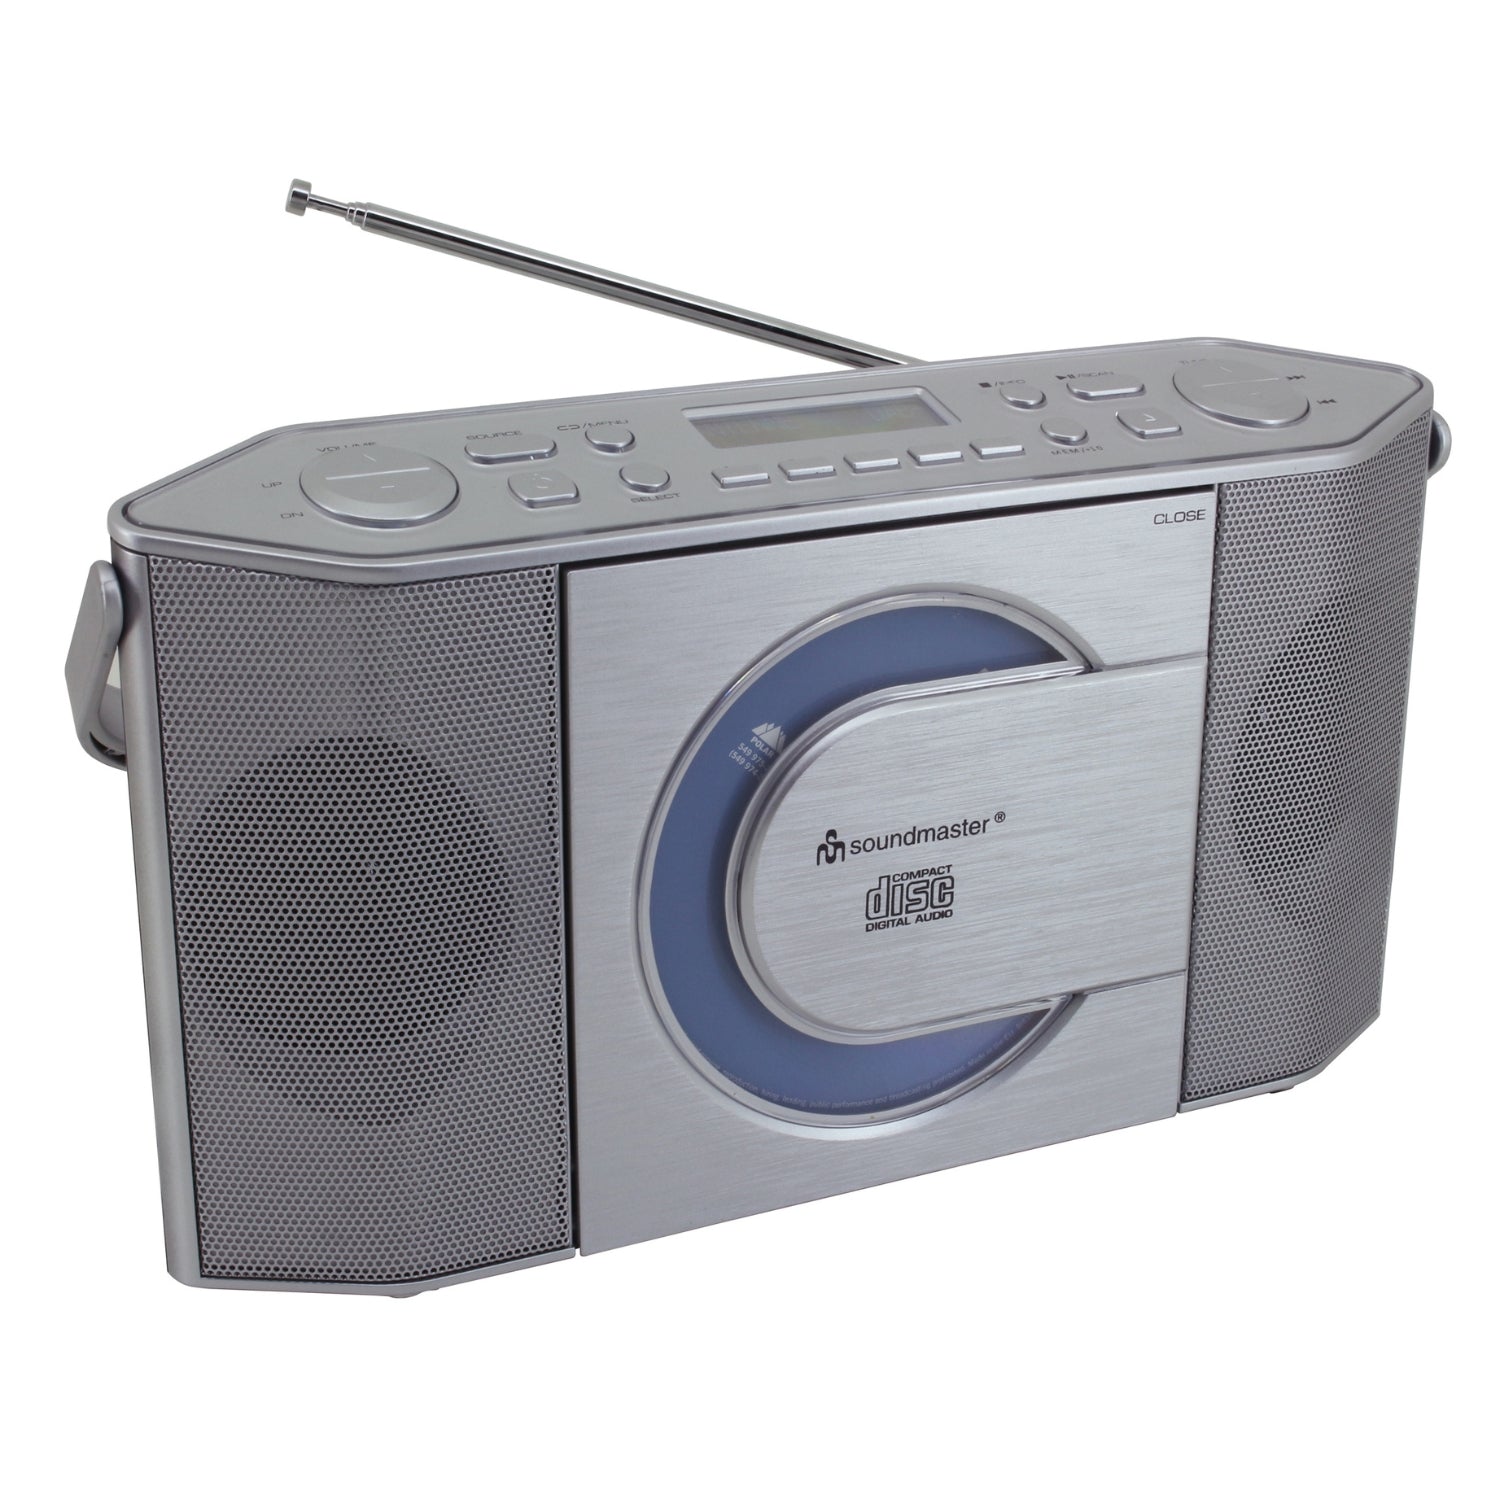 B-ITEM Soundmaster RCD1770SI digital radio radio recorder DAB+ with USB and CD player MP3 headphones clock